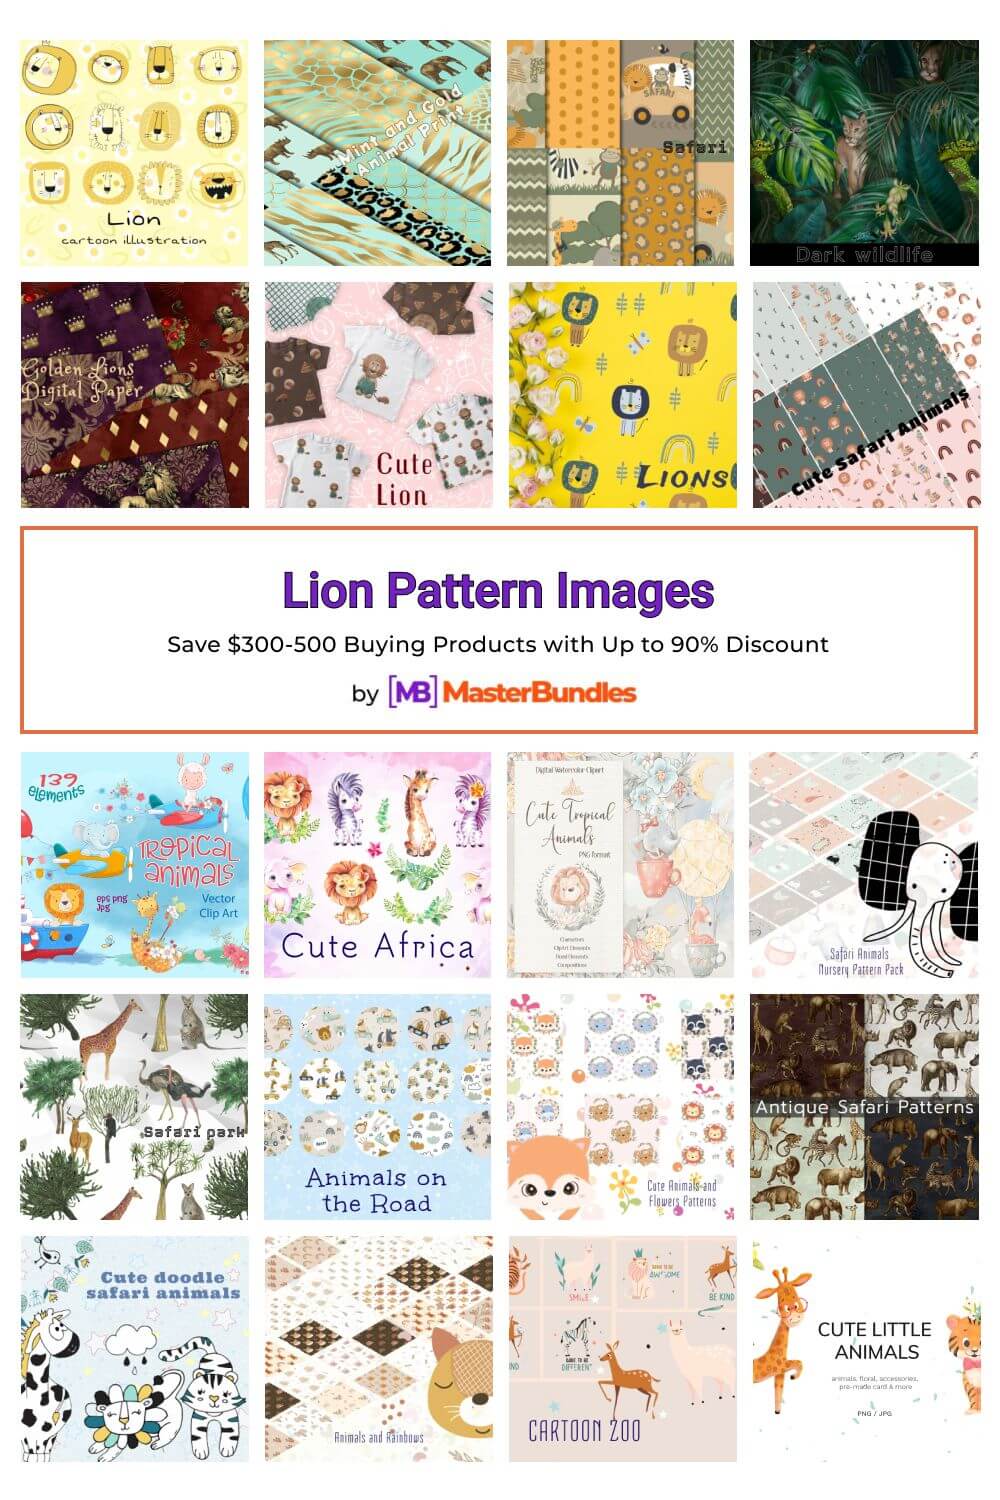 lion pattern images pinterest image.